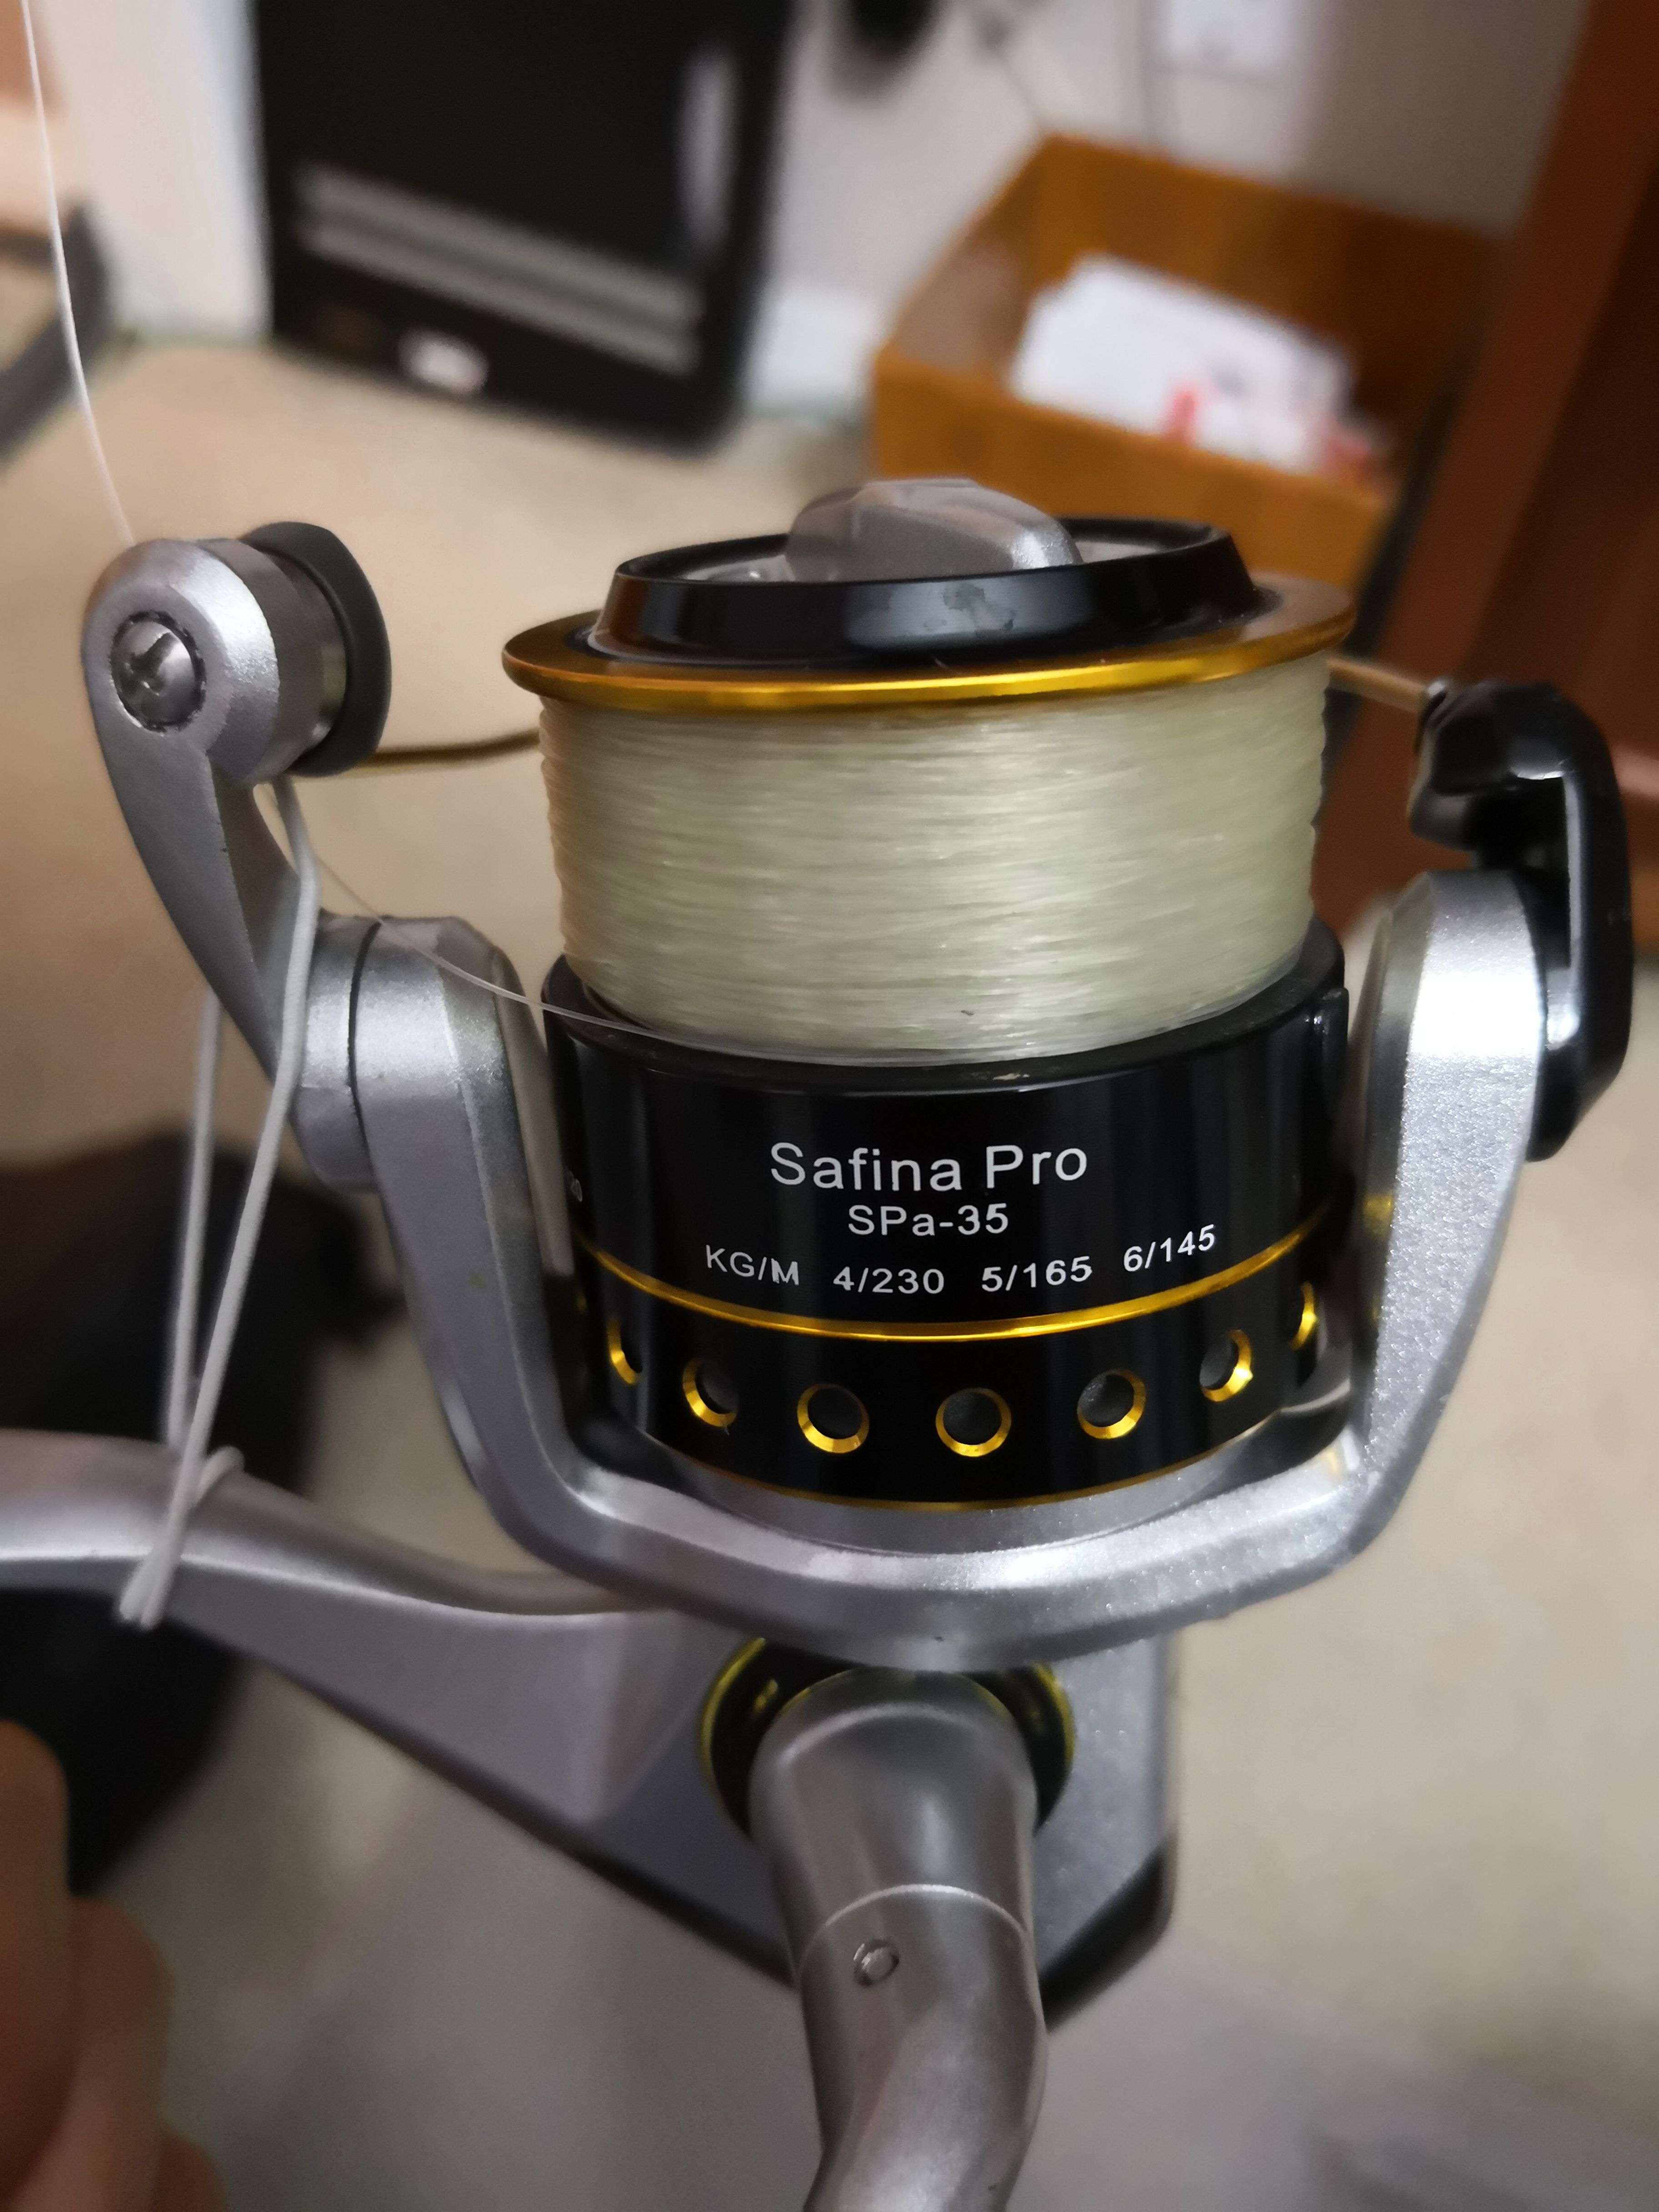 Yo-Zuri Hybrid vs. P-Line CX Premium - Fishing Rods, Reels, Line, and Knots  - Bass Fishing Forums